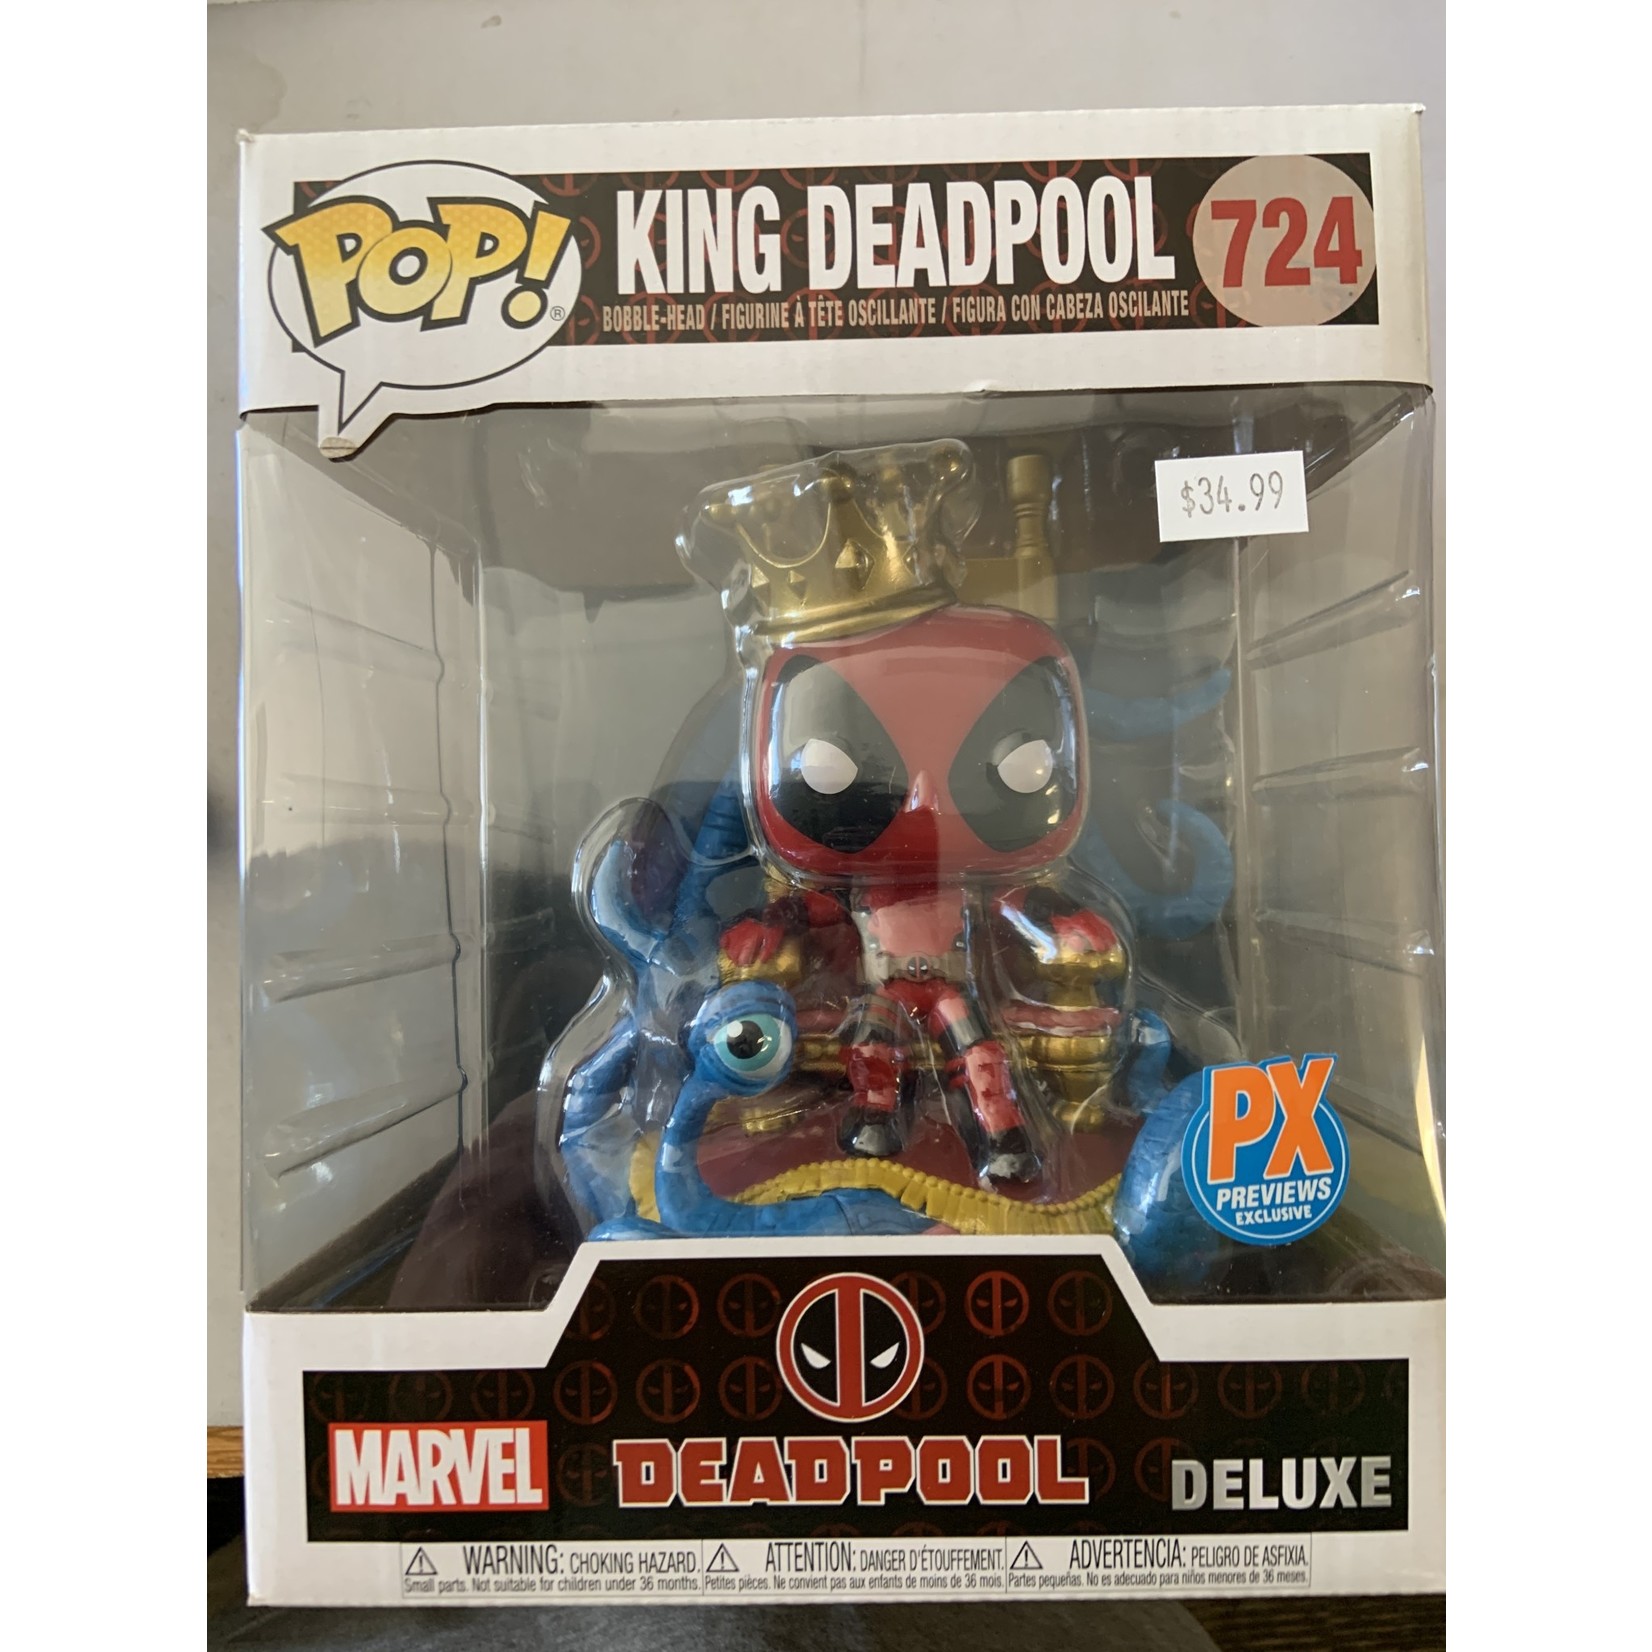 Pop! Deluxe Marvel Heroes King Deadpool on Throne Vinyl Figure